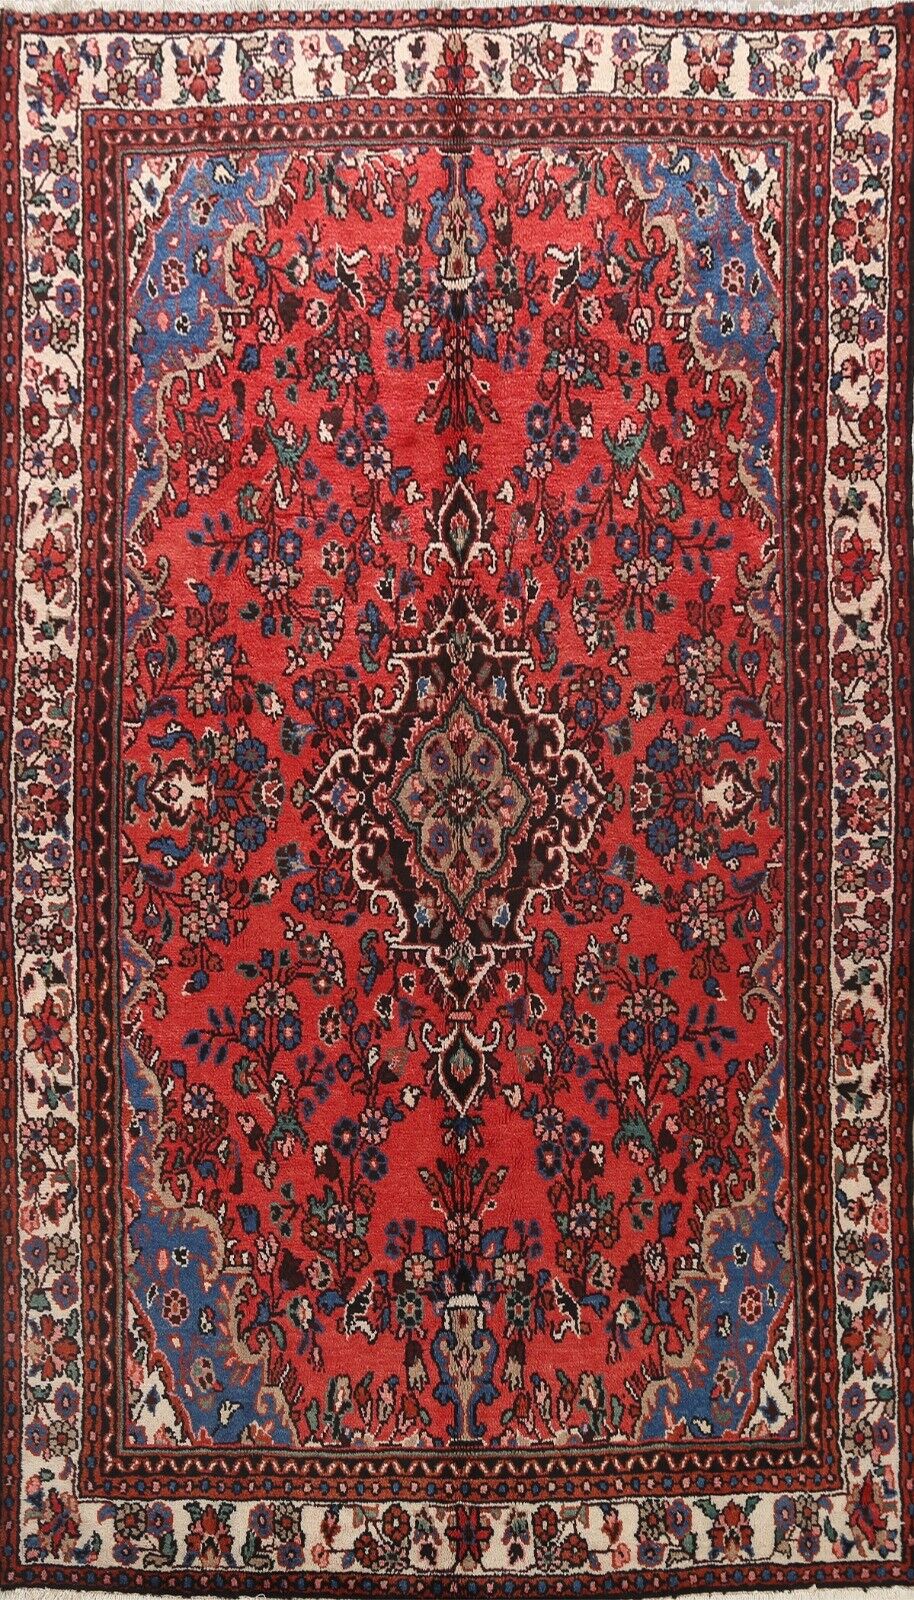 Vintage Floral RED IVORY Traditional Area Rug Wool Handmade Oriental Carpet 7x10